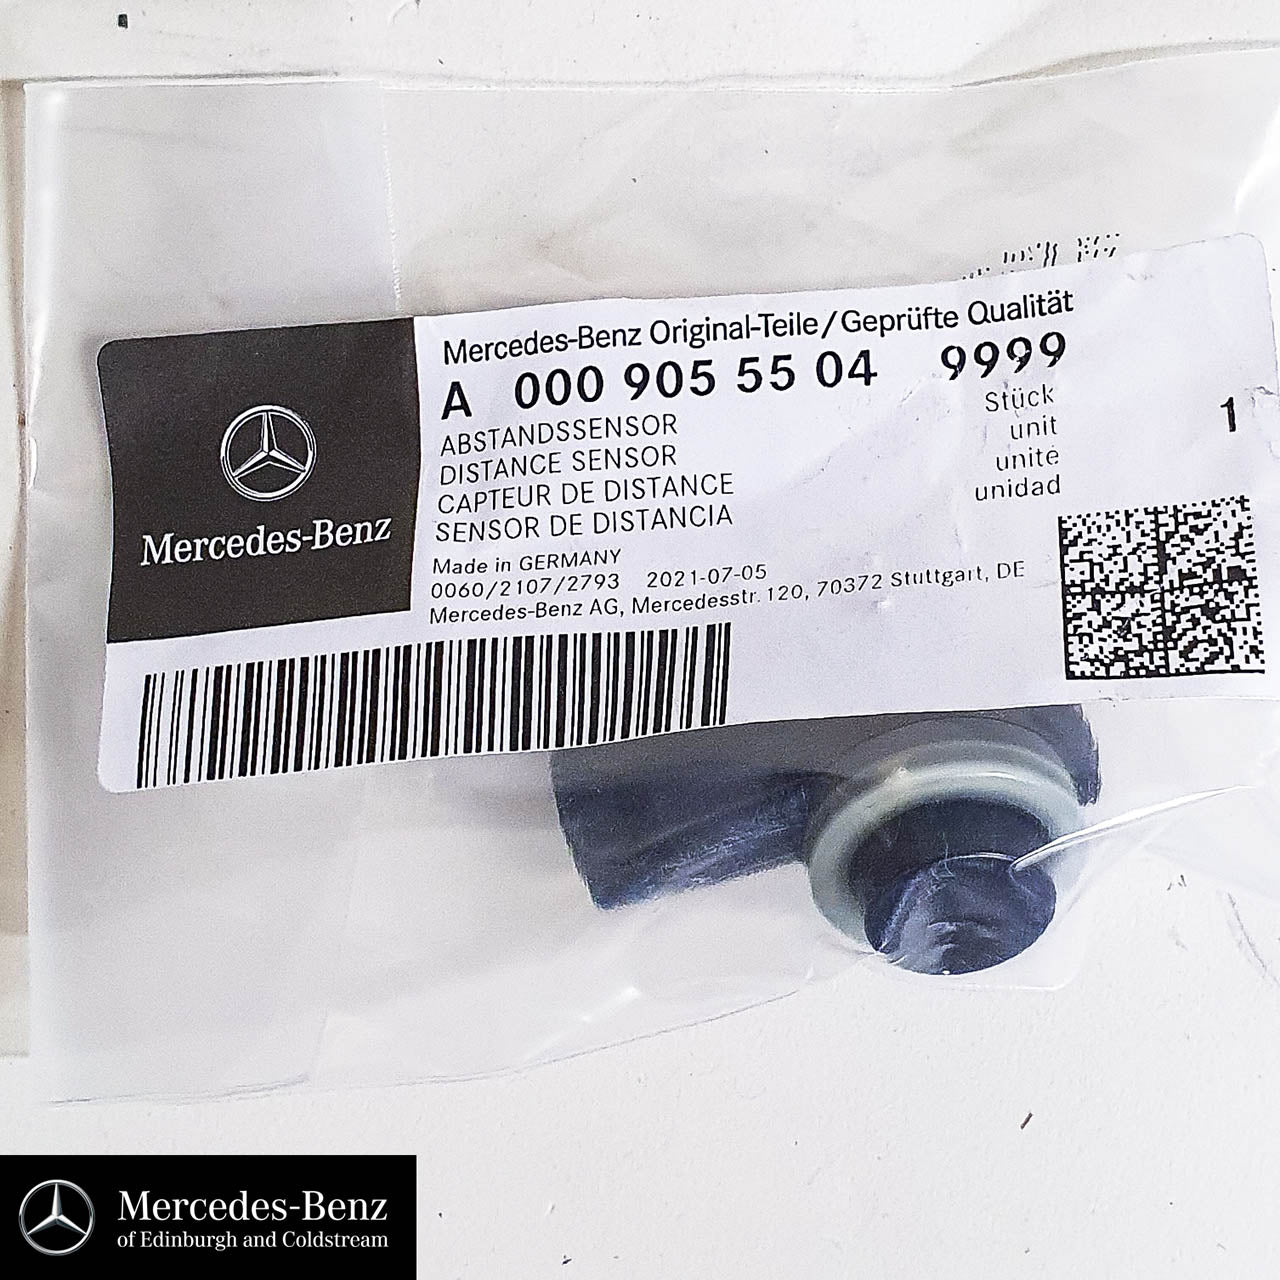 Genuine Mercedes-Benz distance sensor